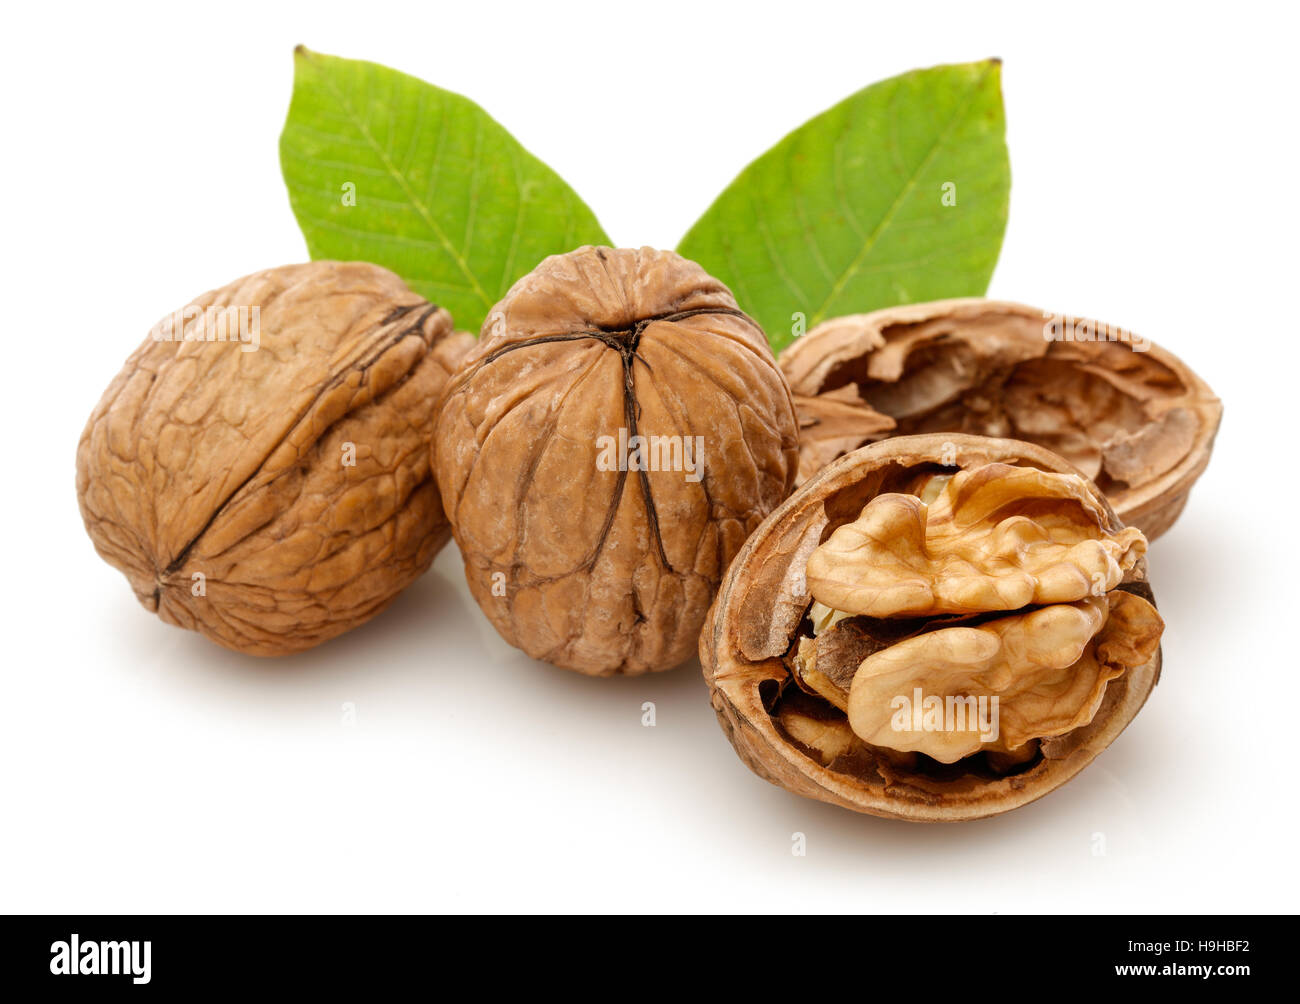 Half walnut kernel and whole walnut. Isolated on a white background Stock Photo